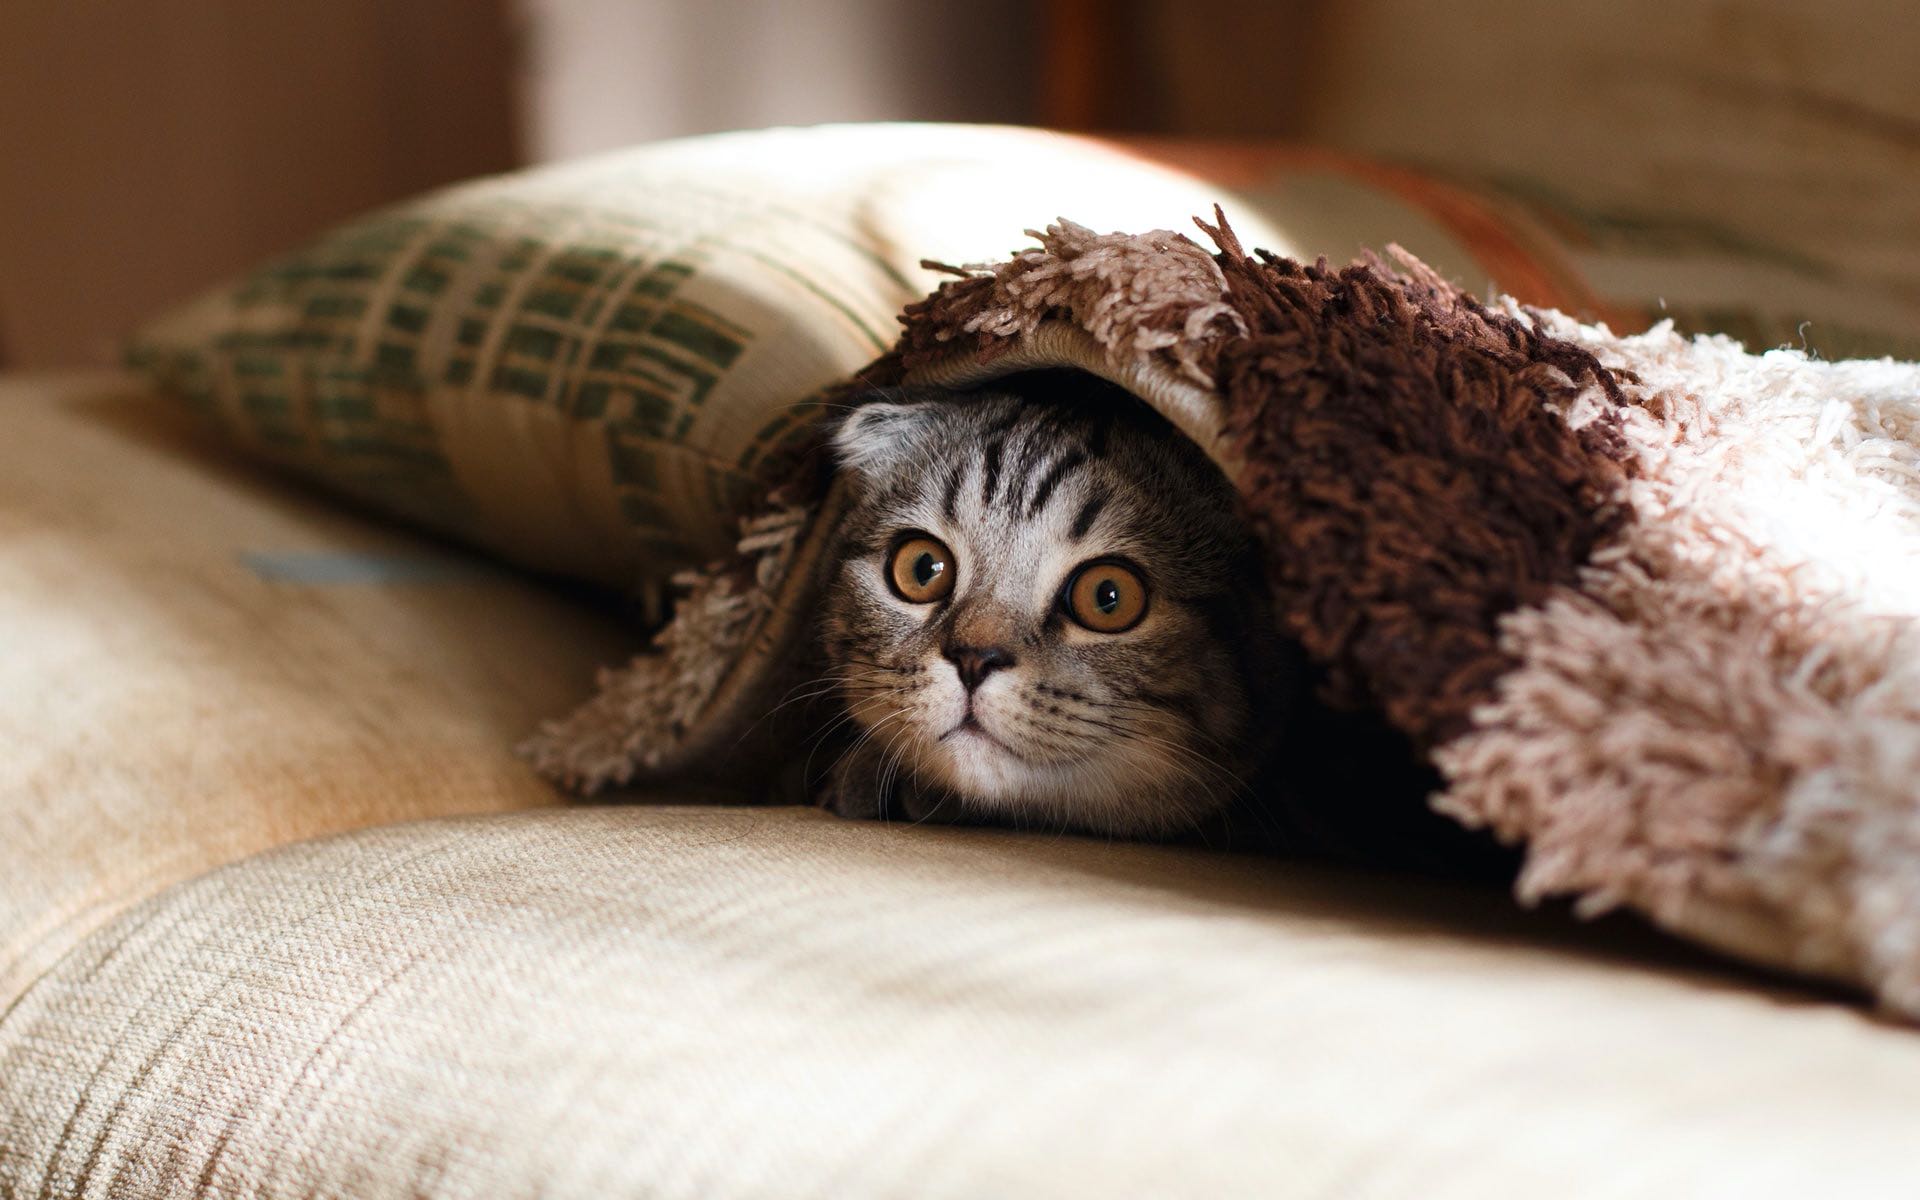 Kitty under a blanket